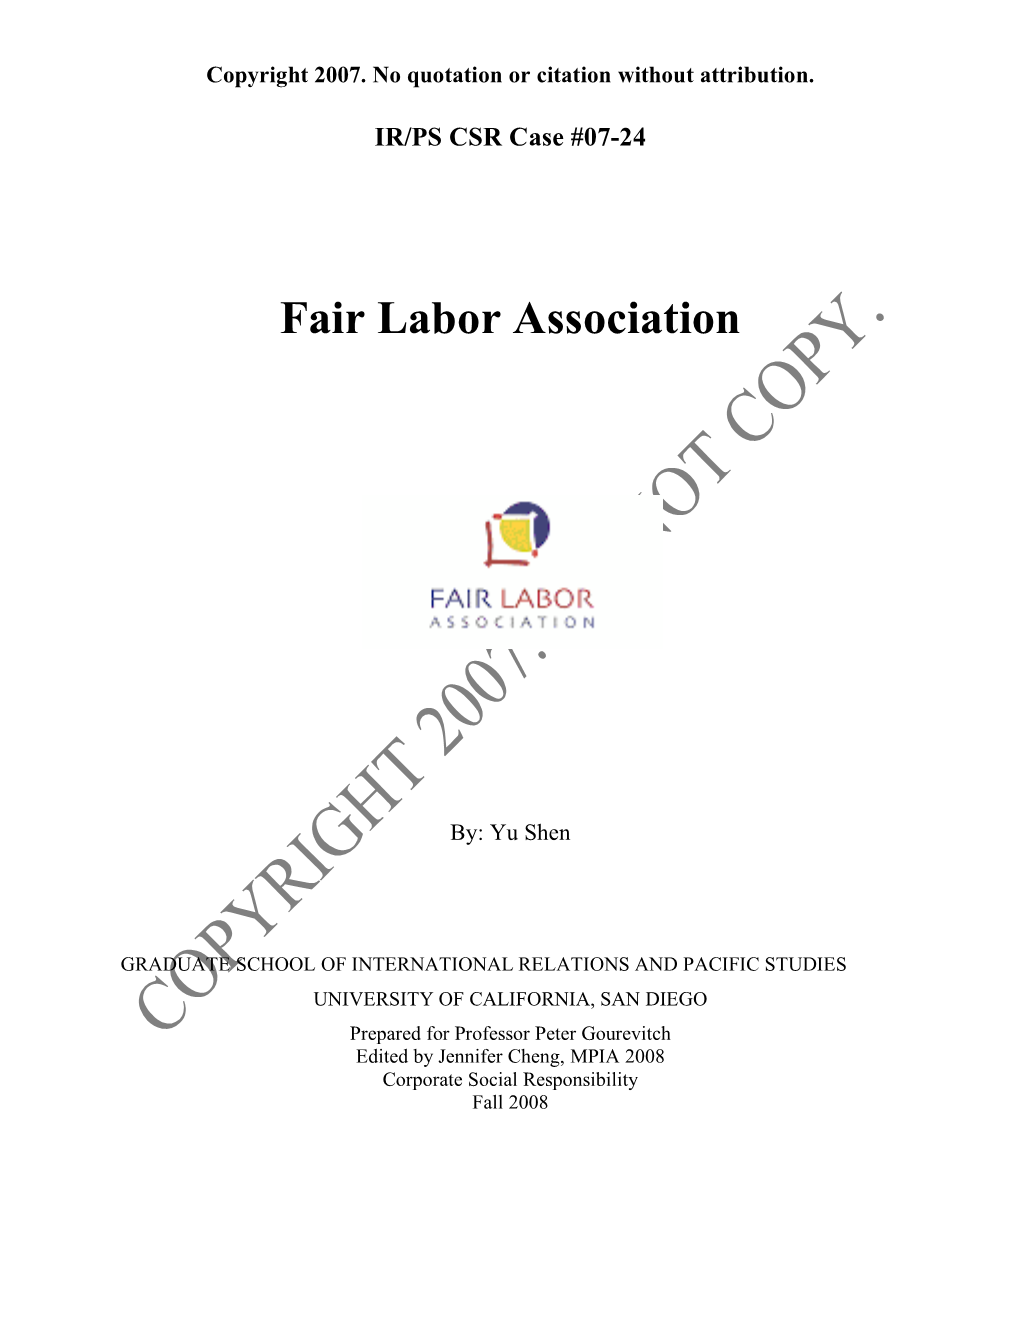 Fair Labor Association